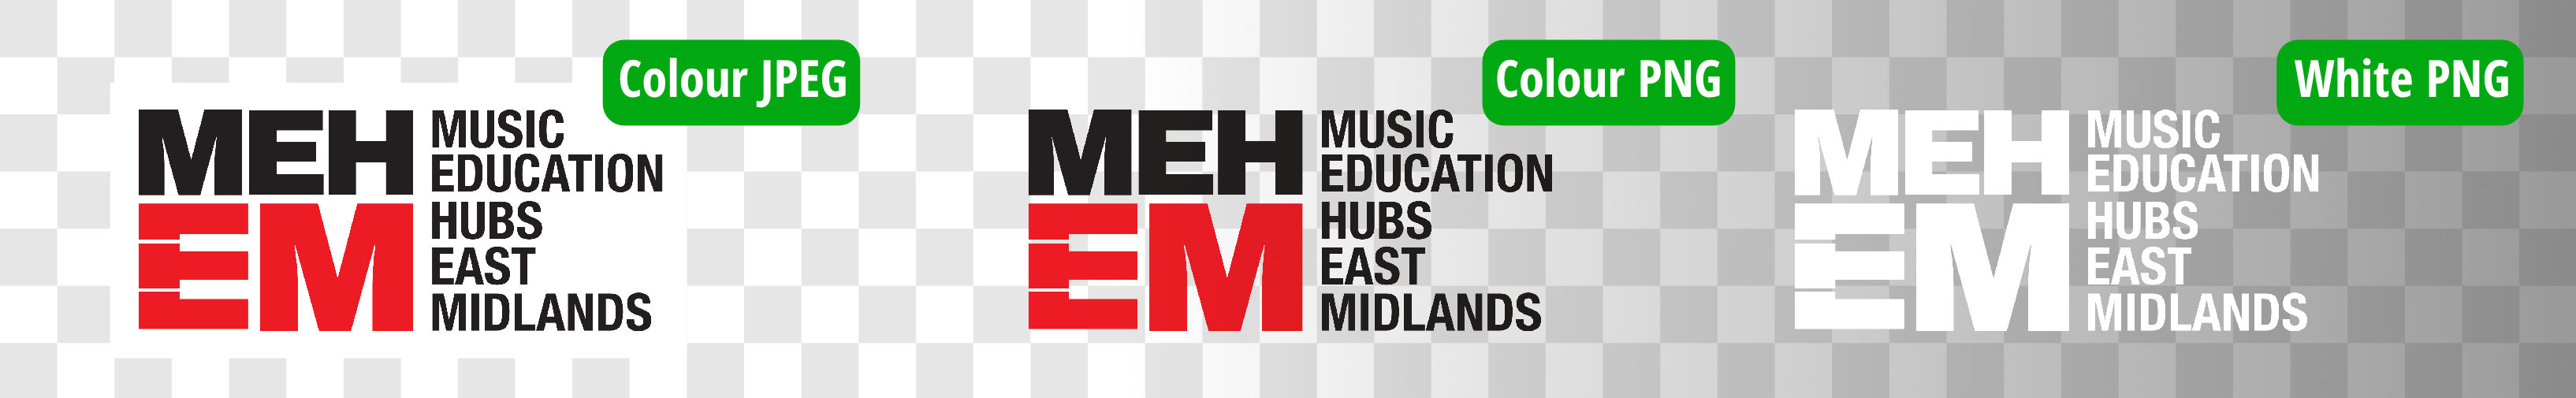 MEHEM Logo Guidance